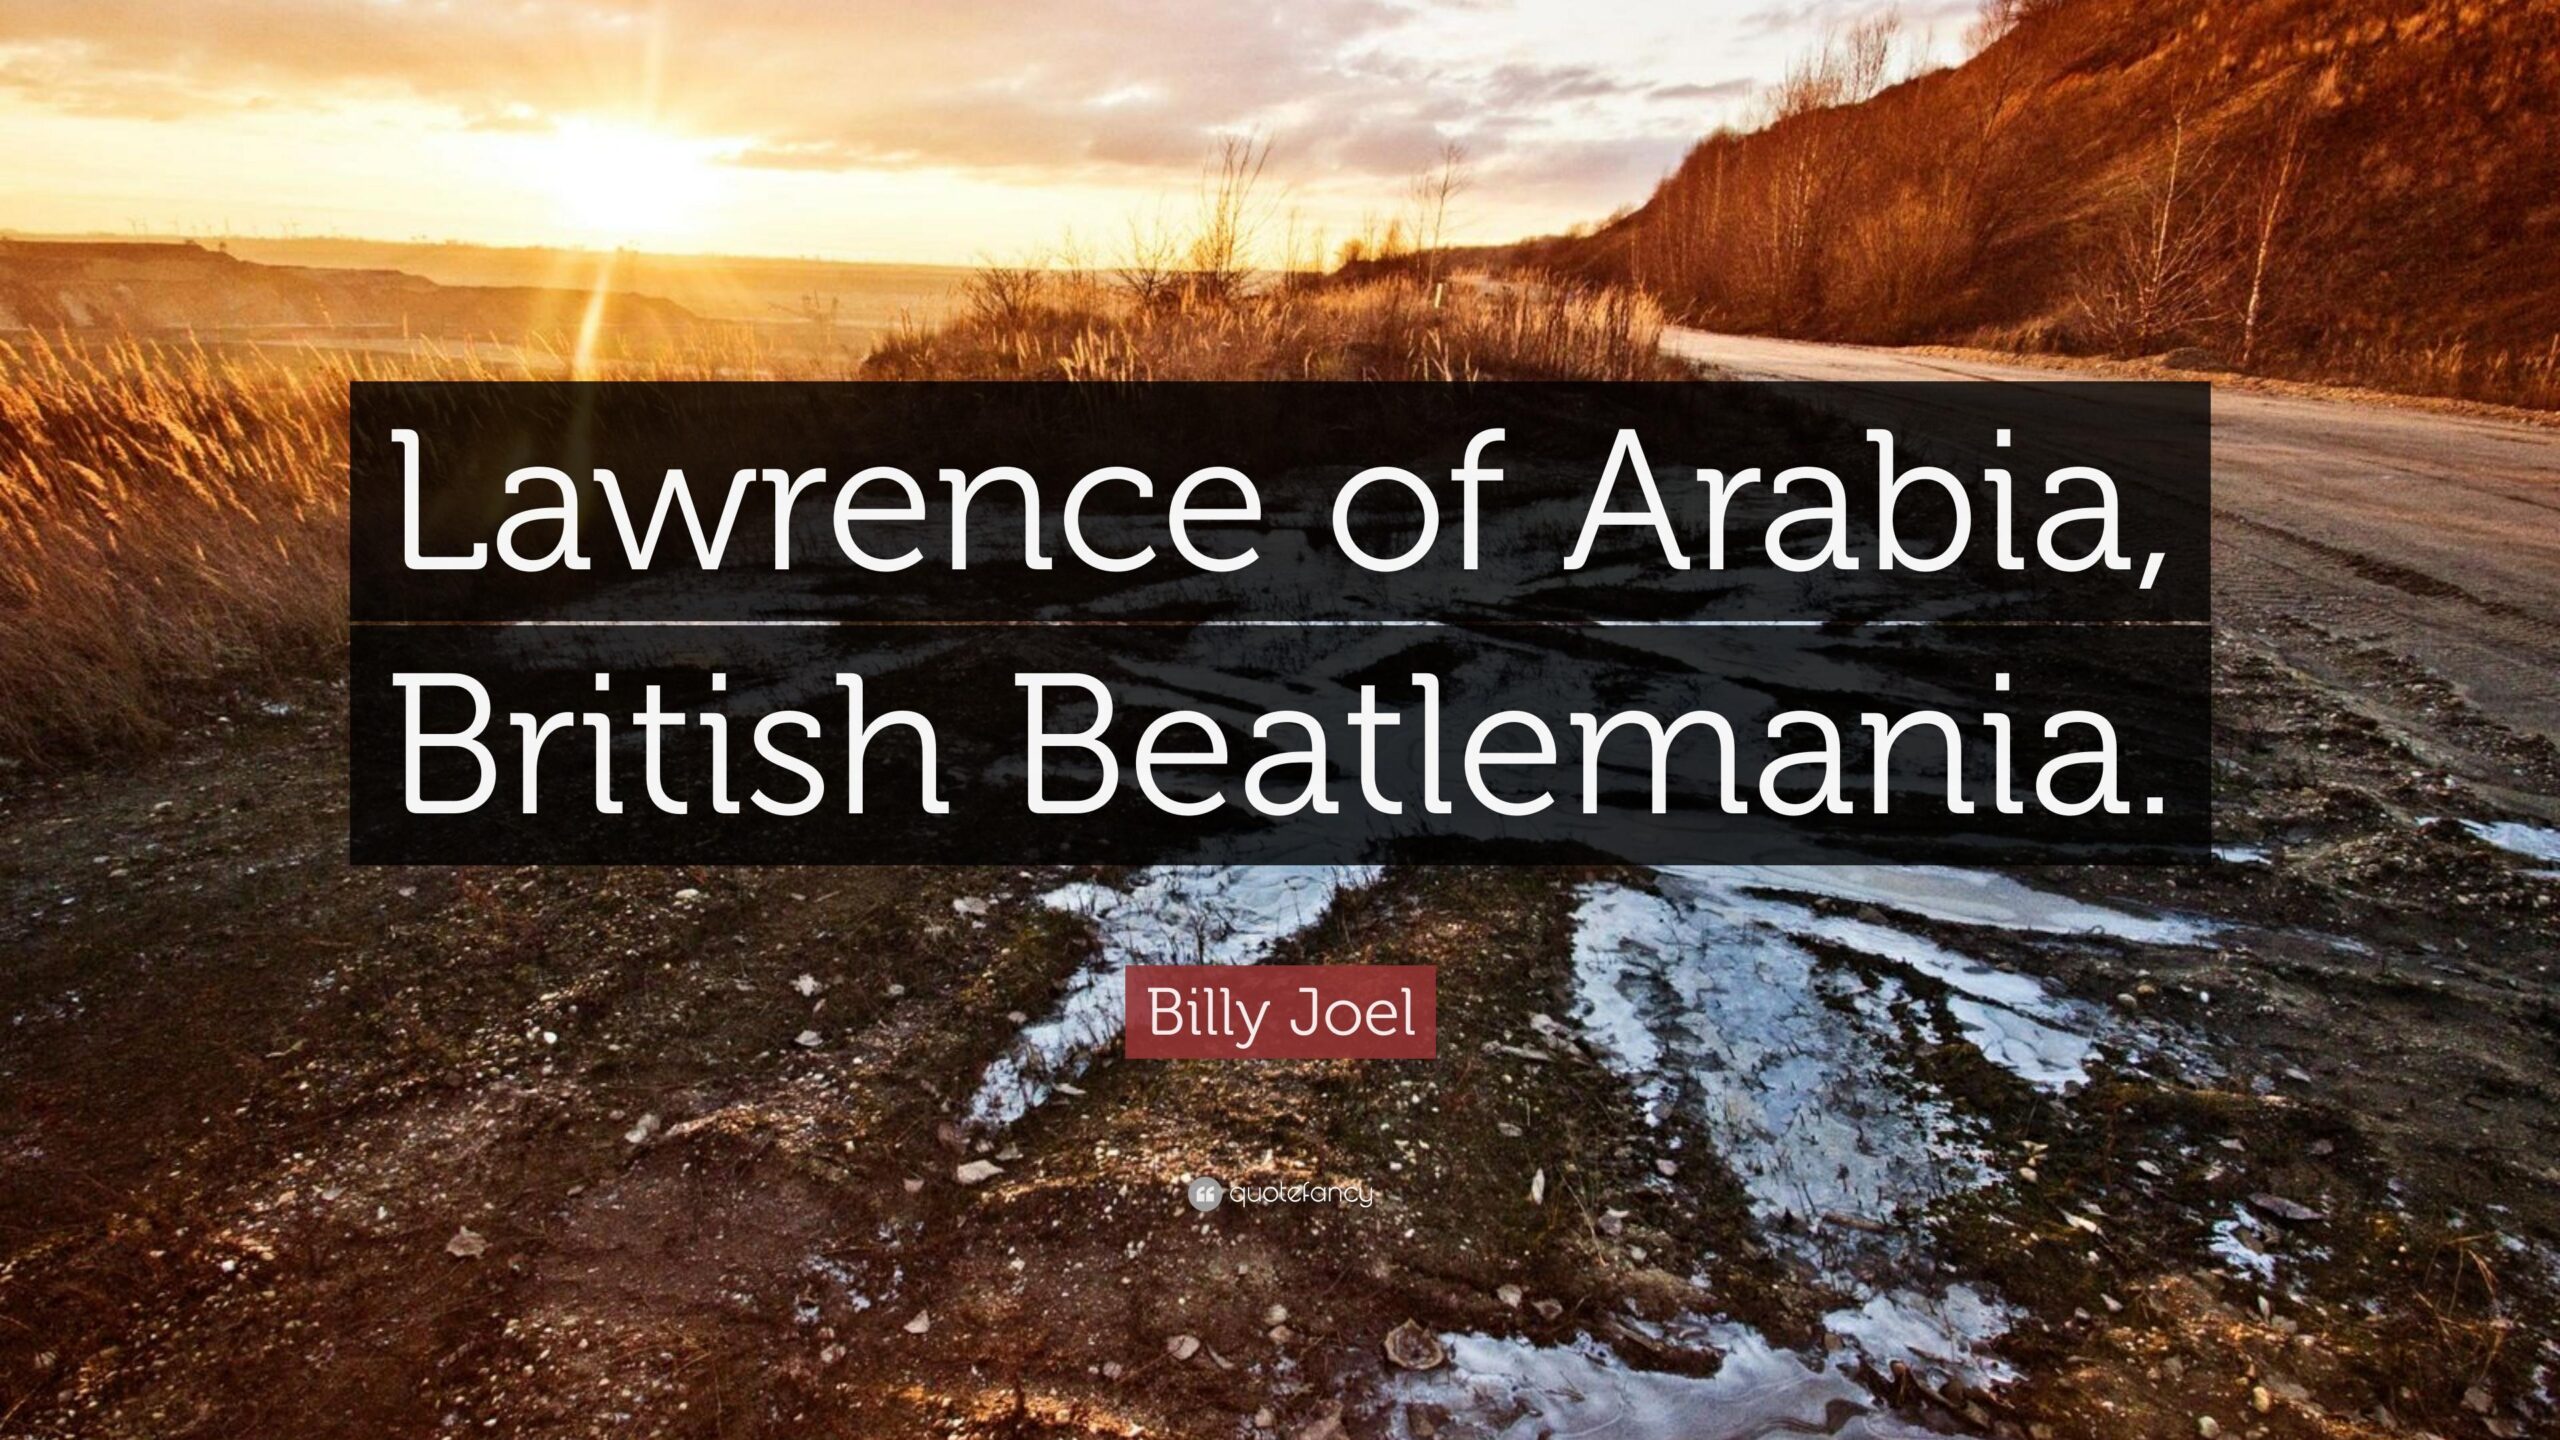 Billy Joel Quote “Lawrence of Arabia, British Beatlemania”